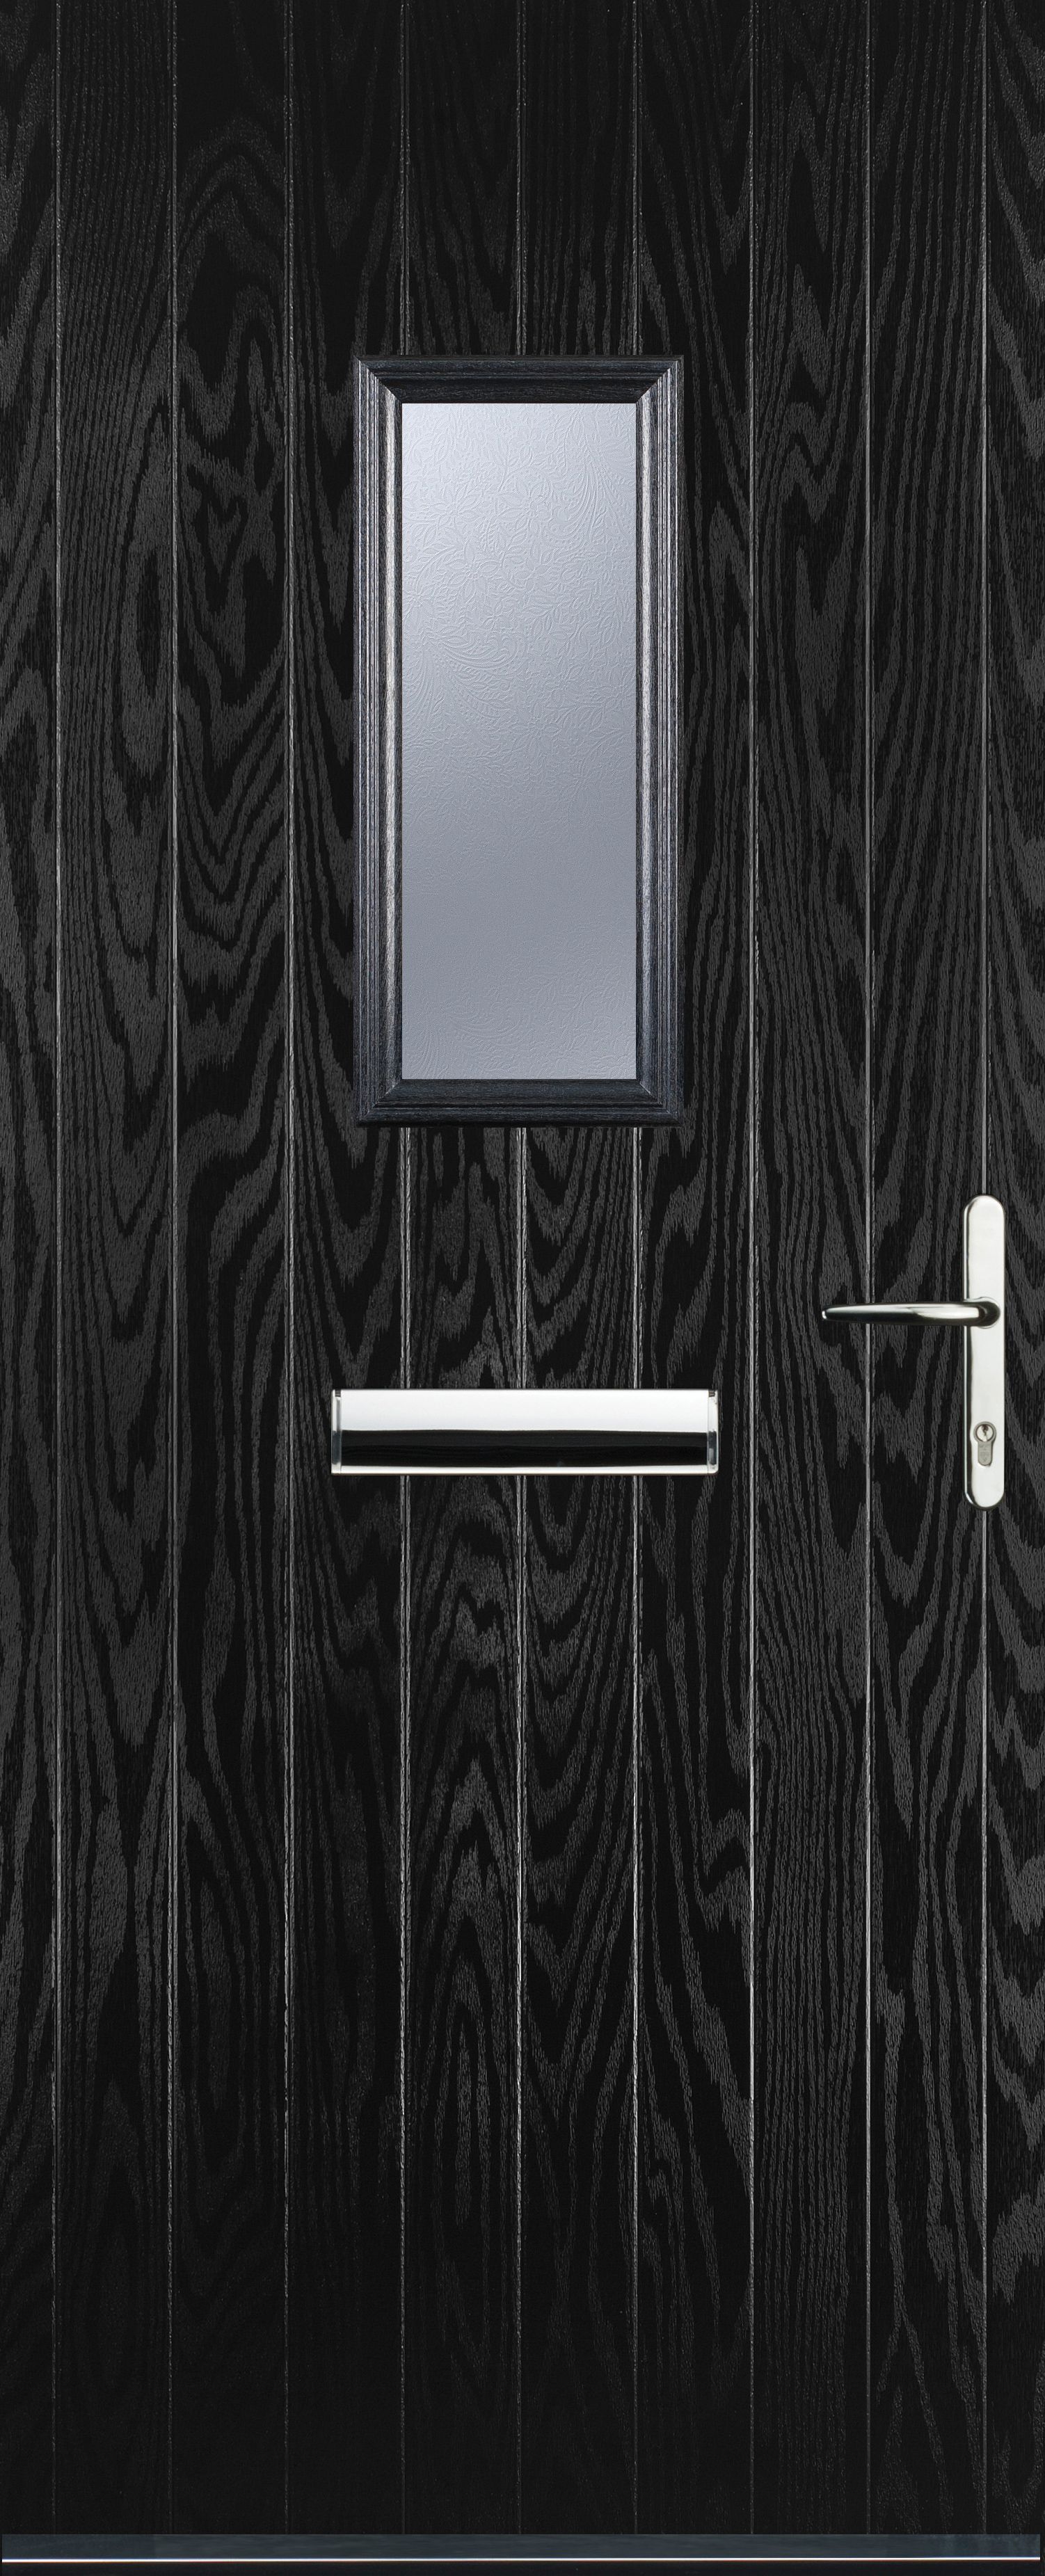 Image of Euramax 1 Square Left Hand Black Composite Door - 840 x 2100mm